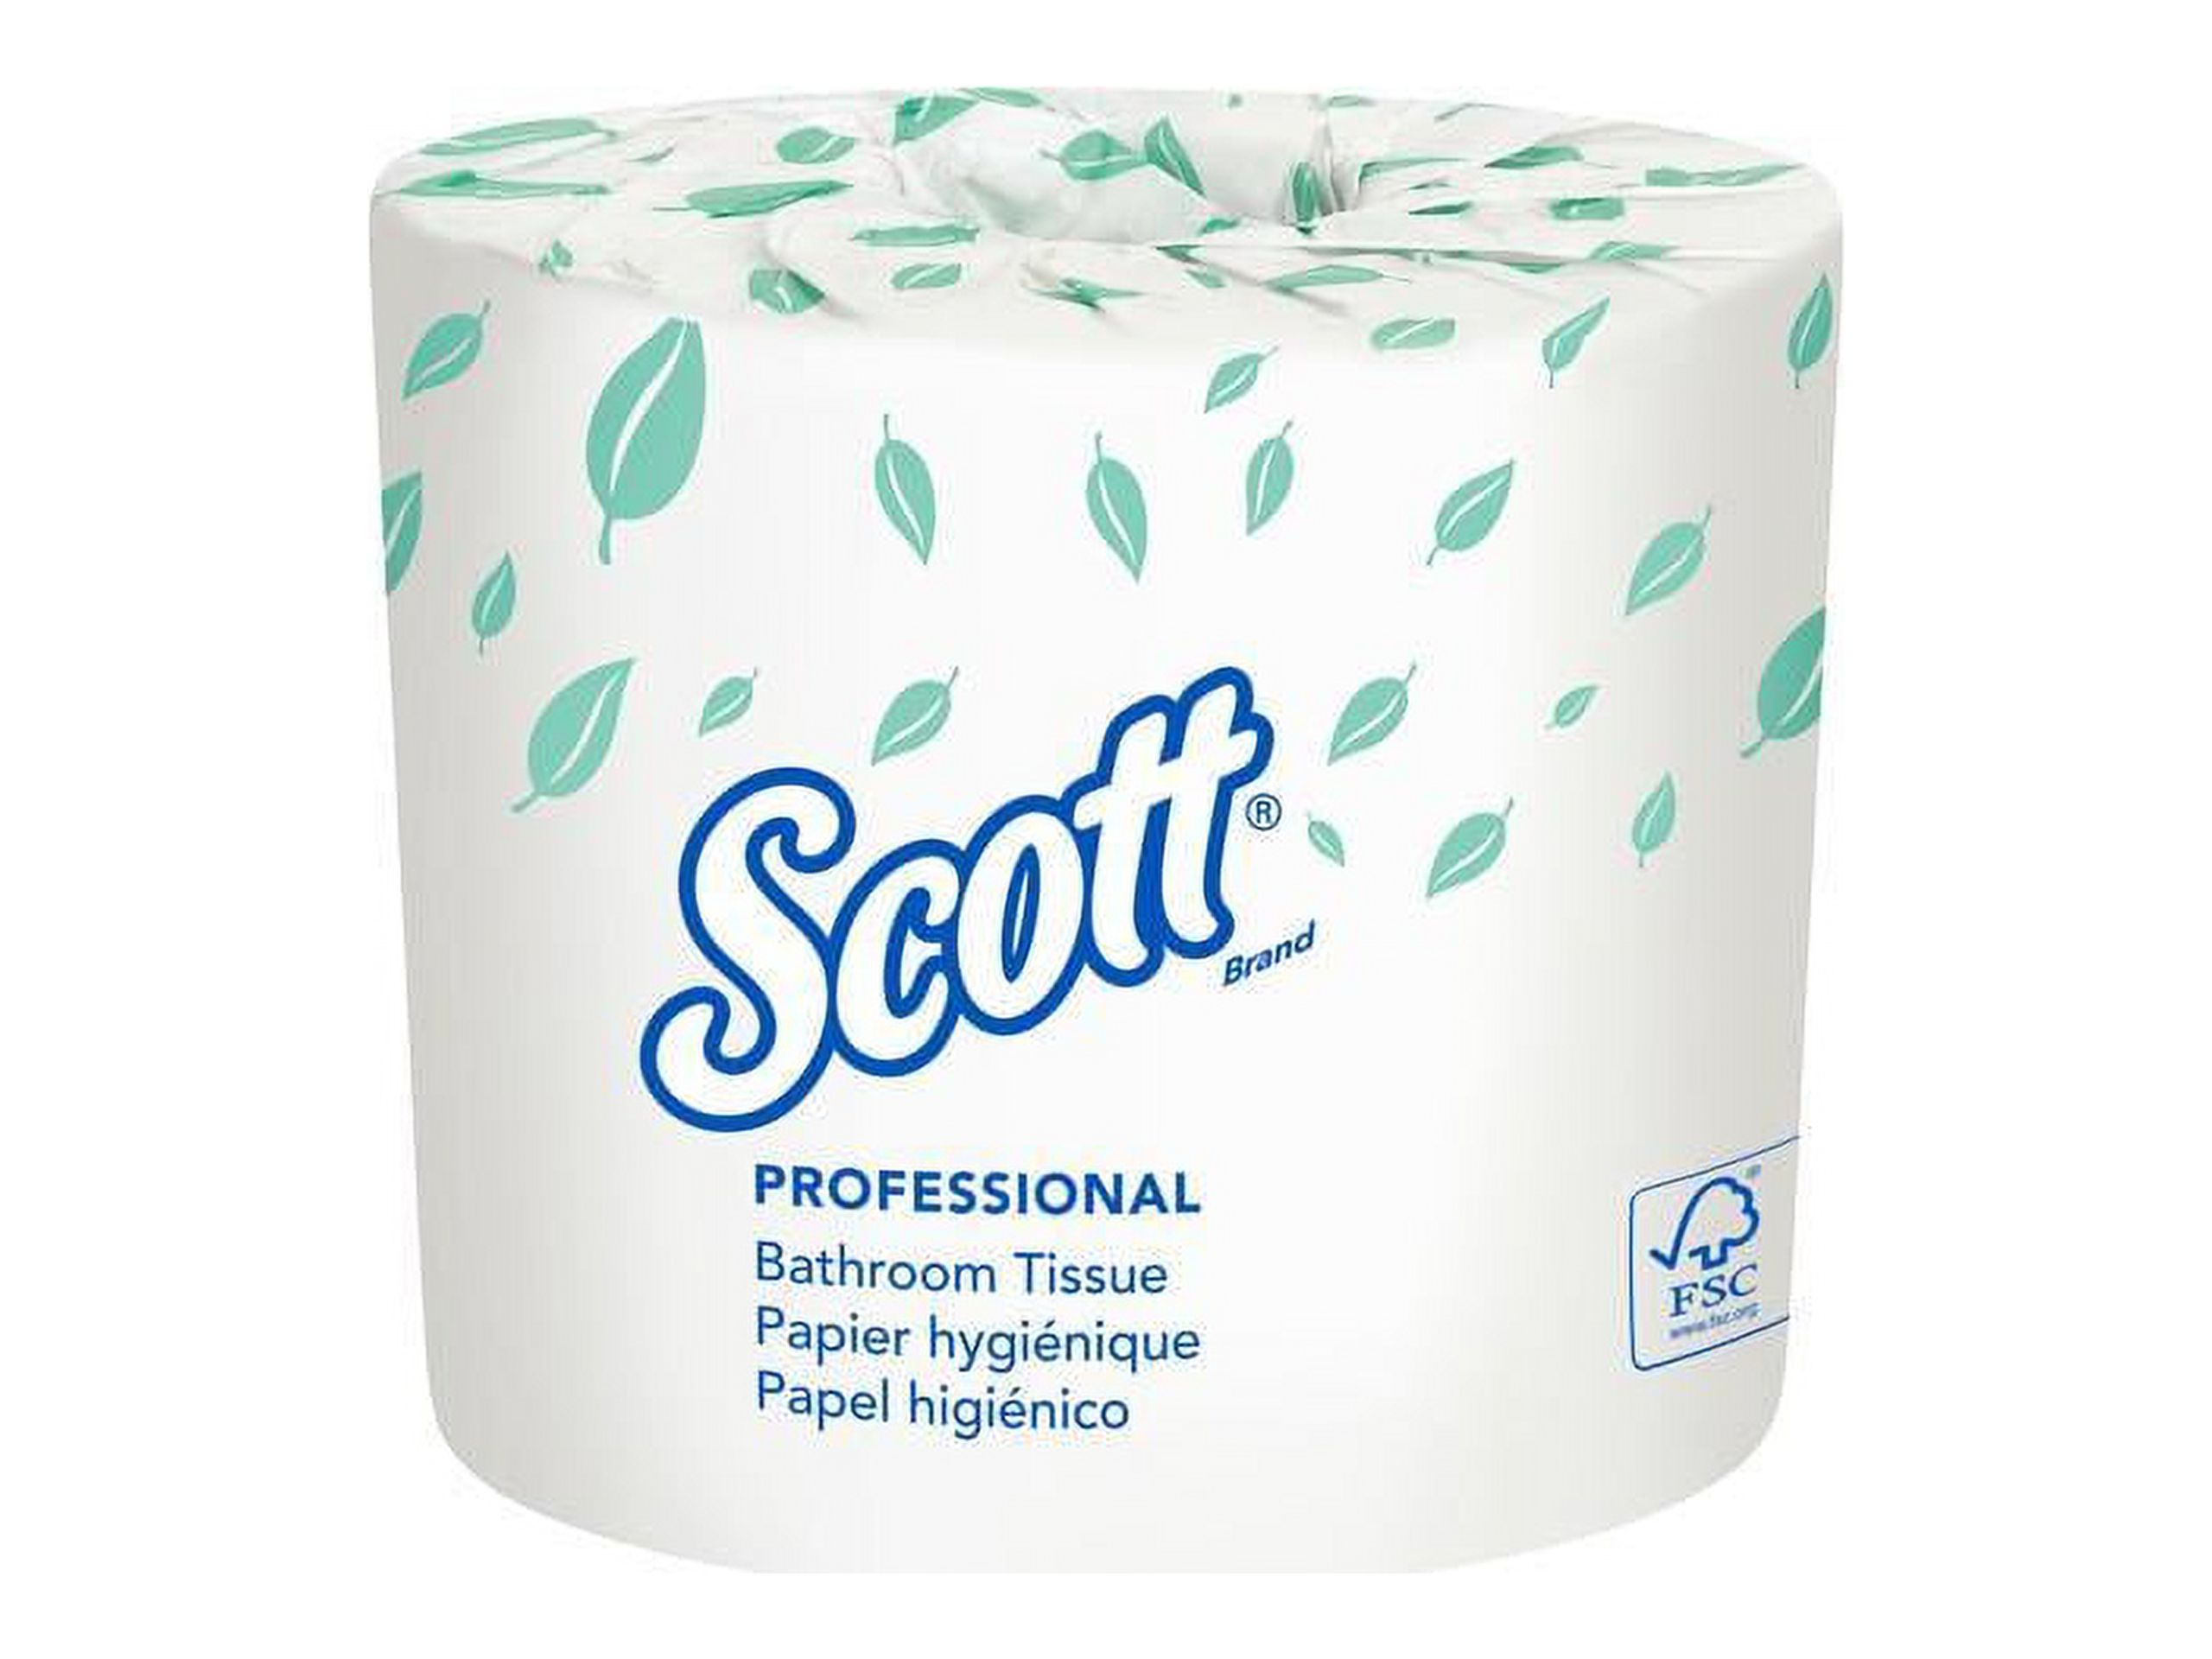 Scott Essential Standard Roll Bathroom Tissue - image 1 of 3